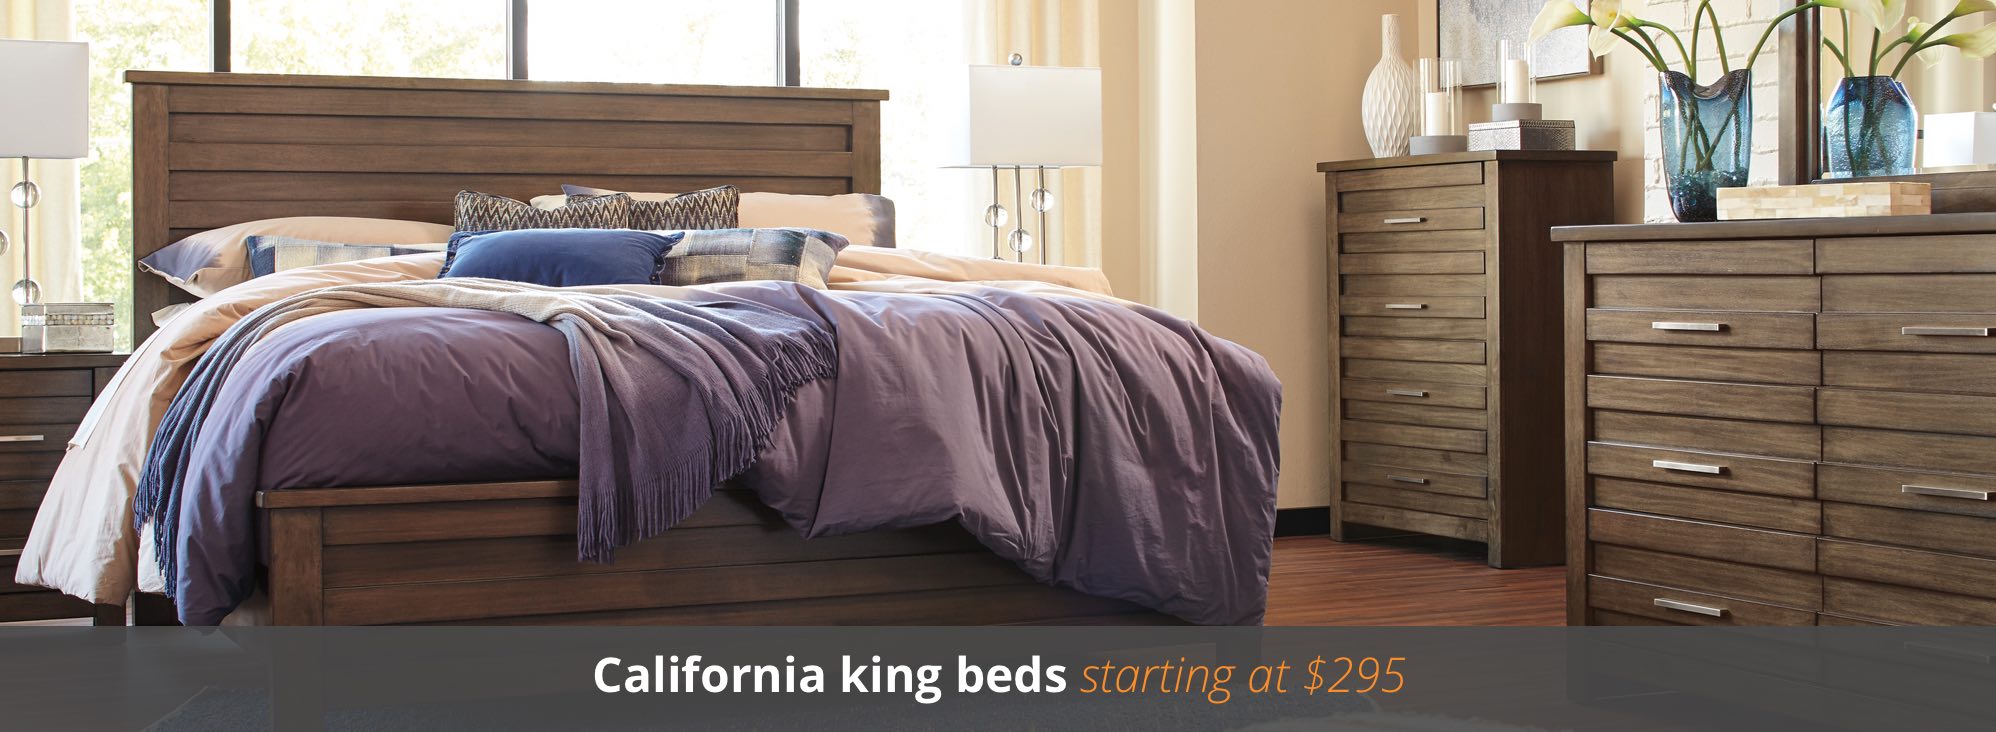 California king beds